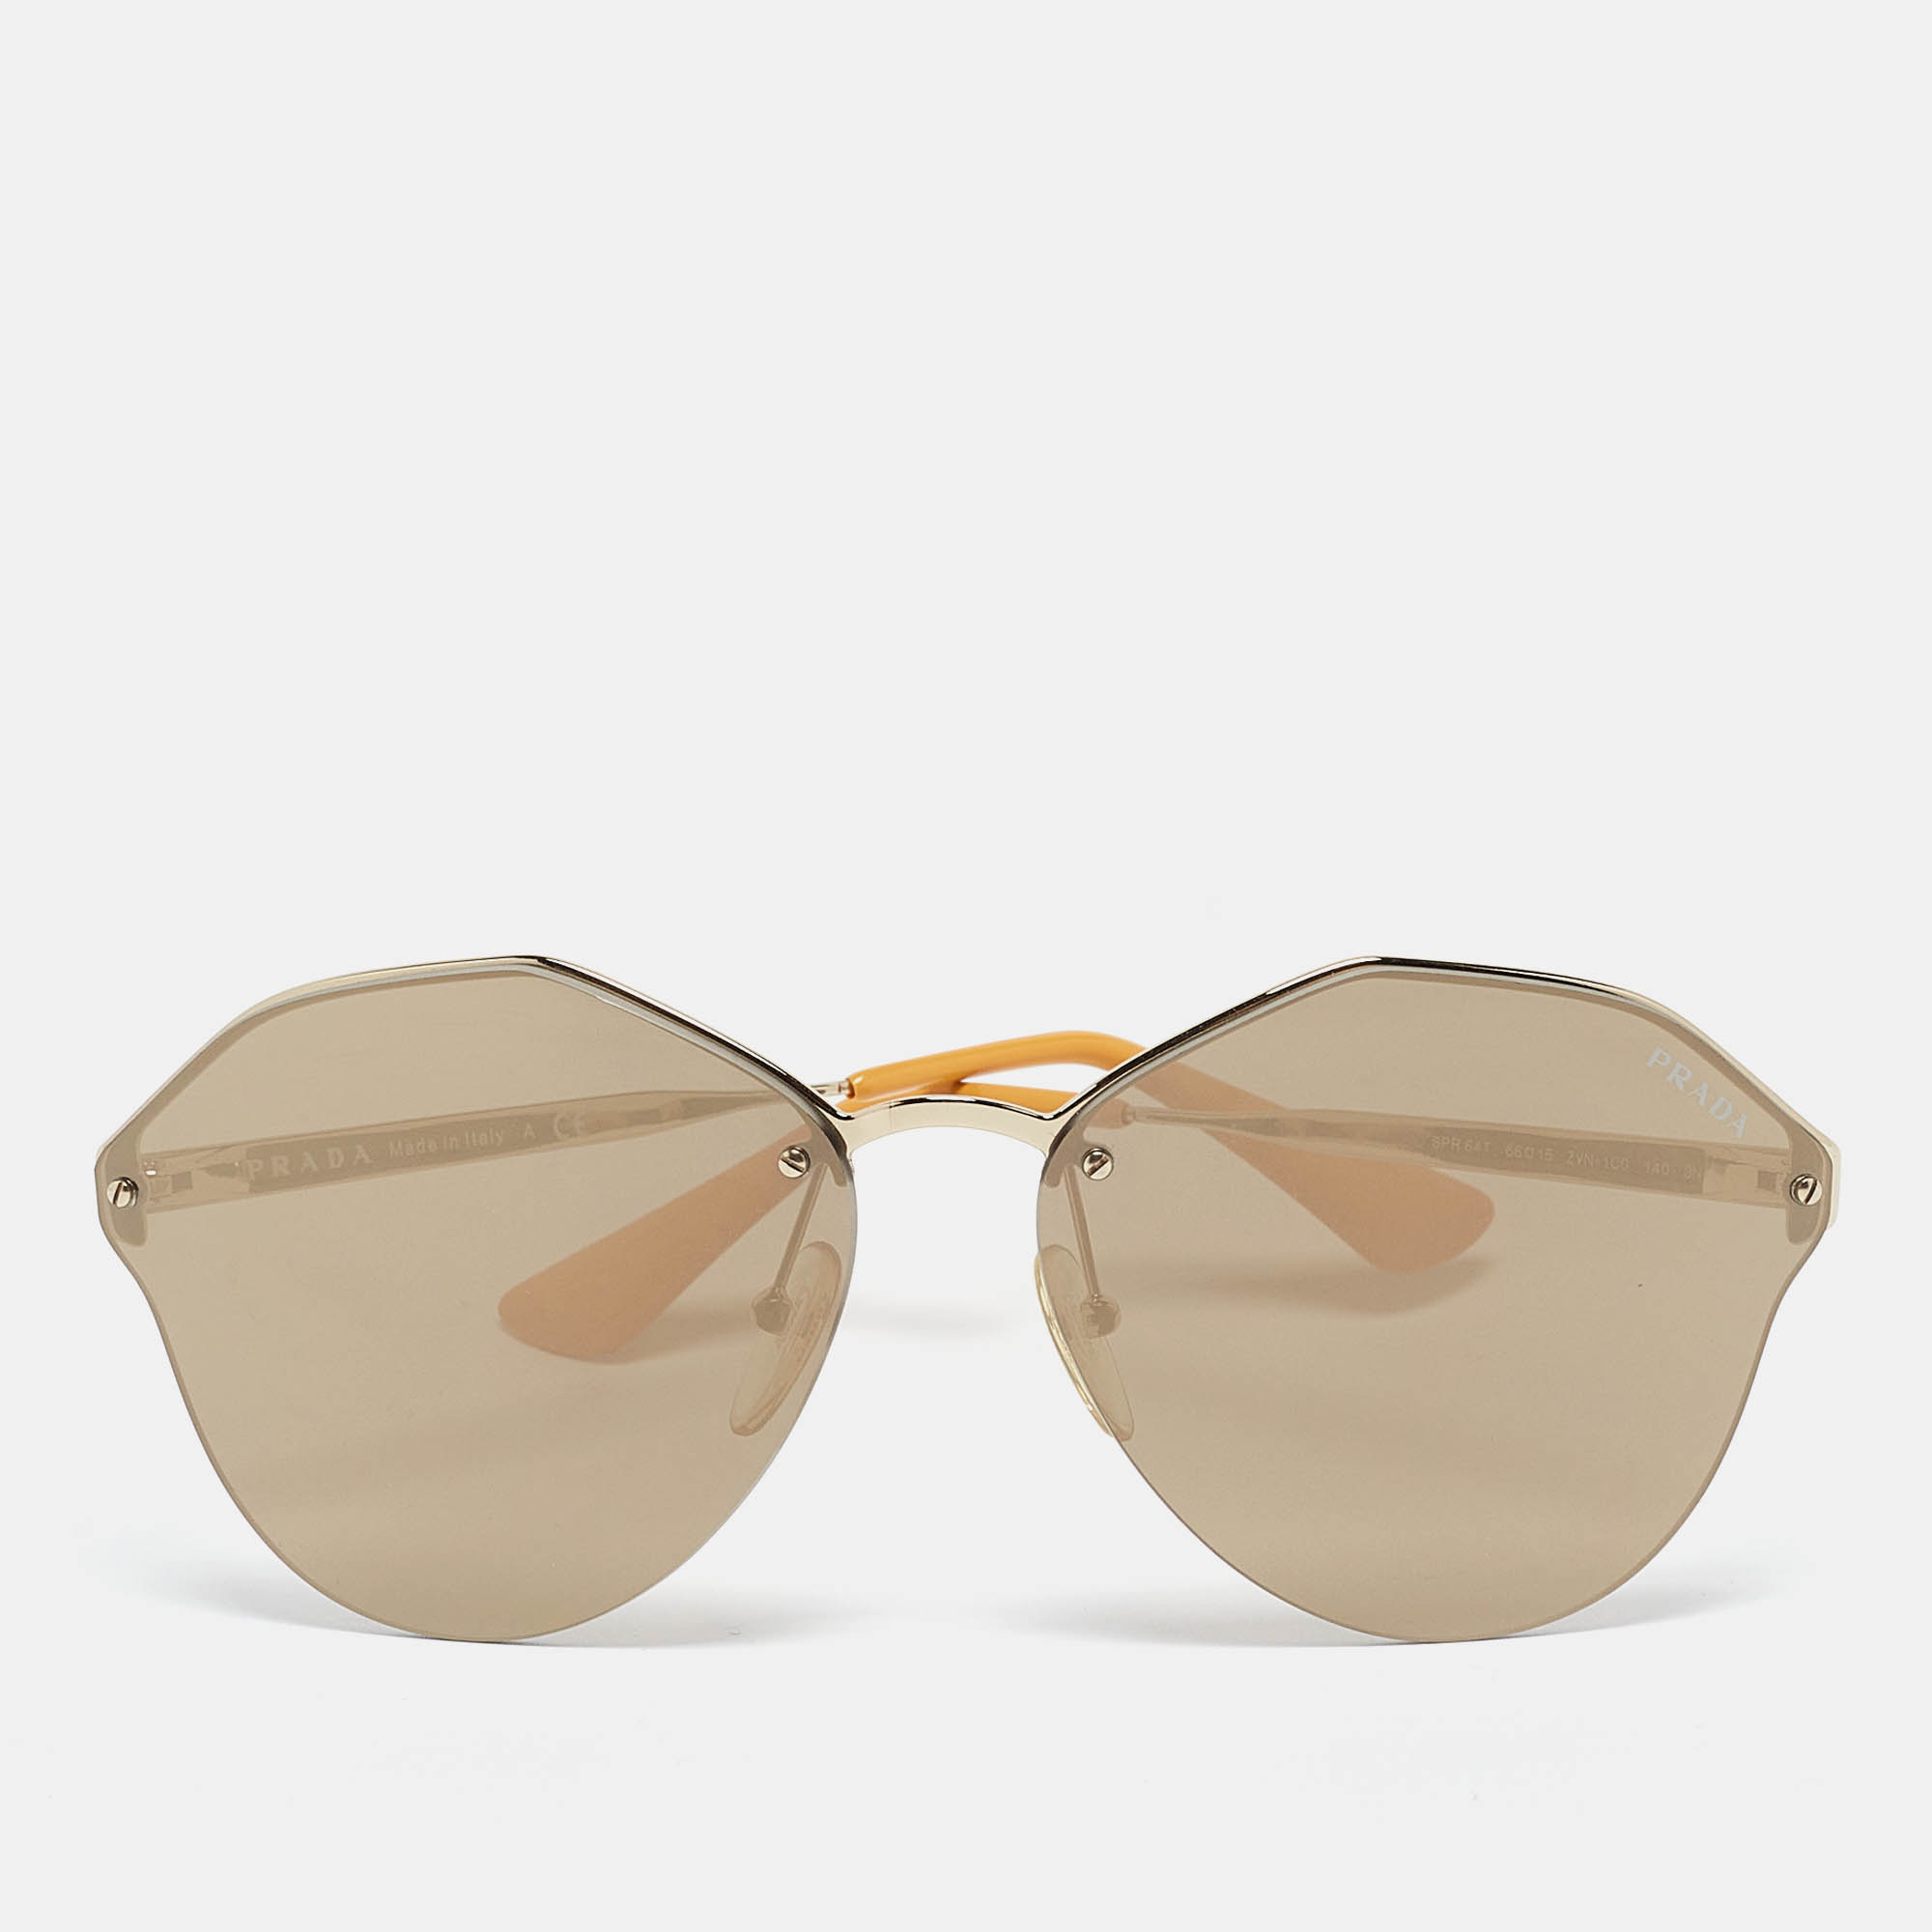 Prada gold mirrored spr64t geometric sunglasses